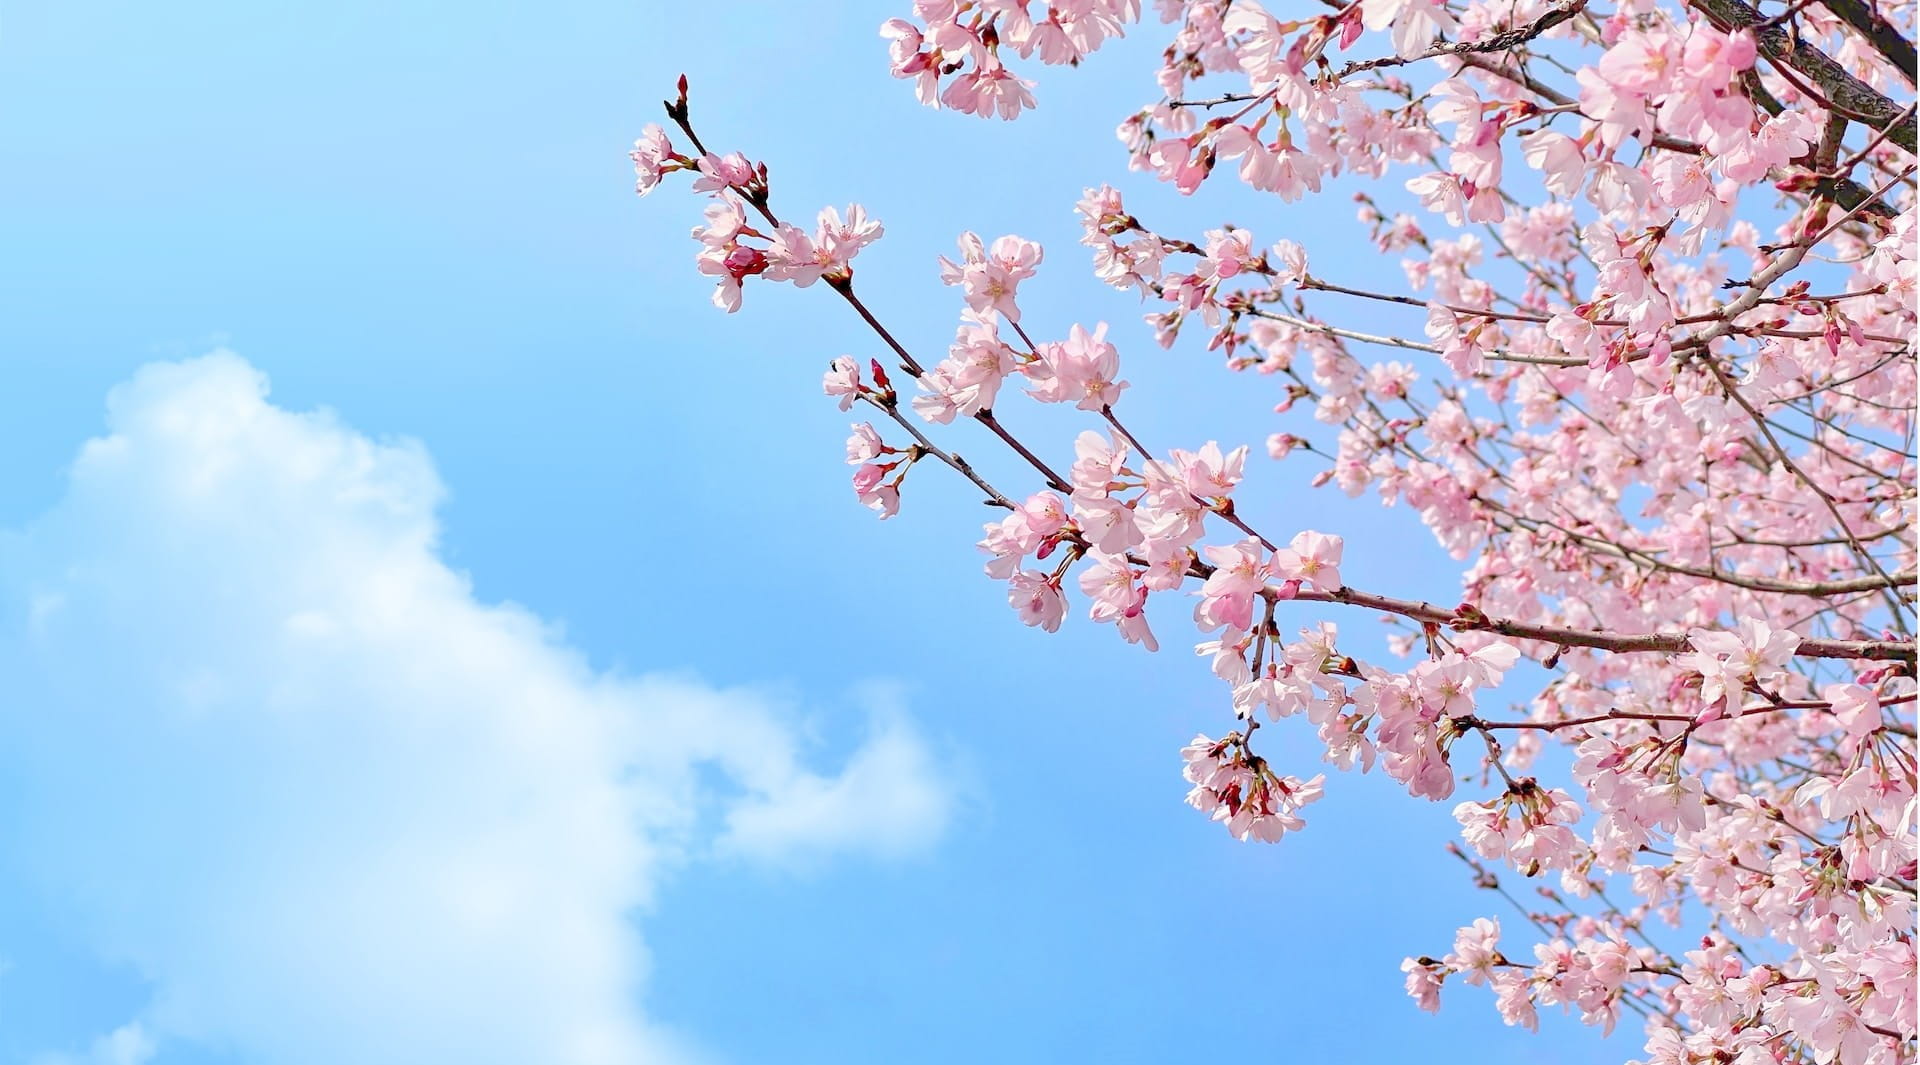 Cheery tree with blossom